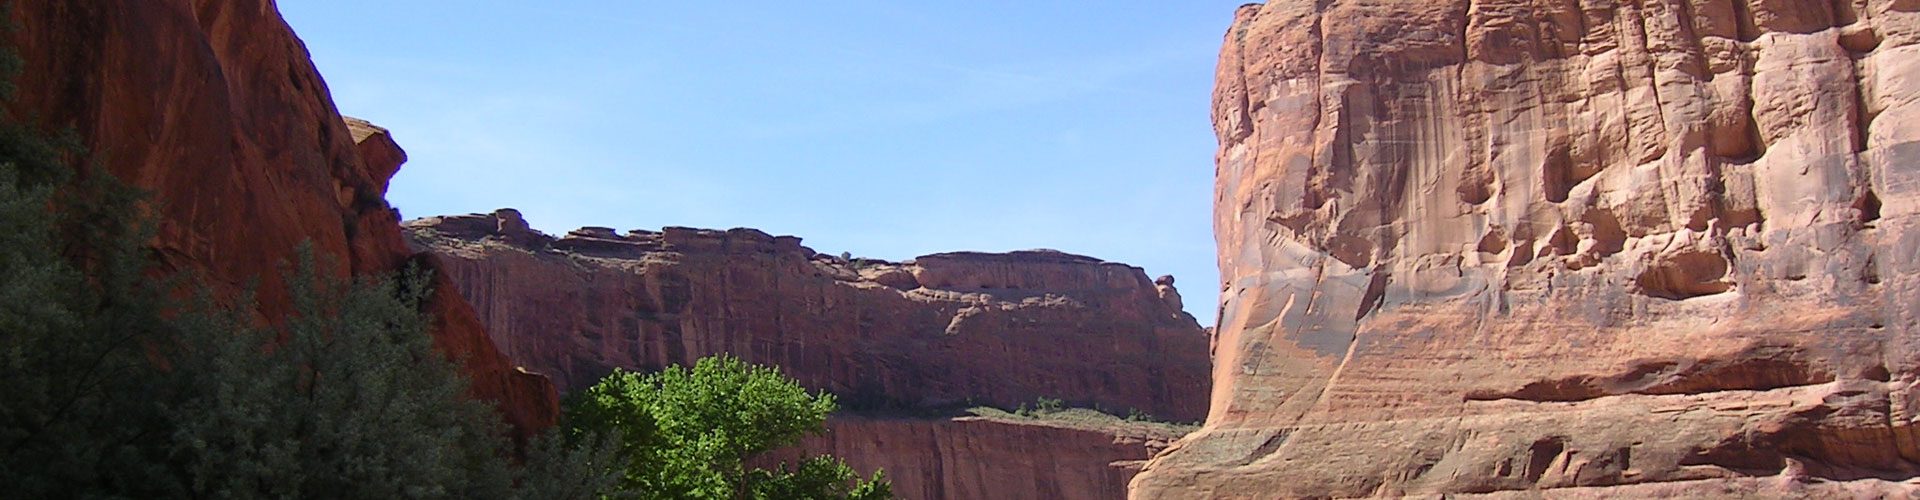 Canyon de Chelly National Monument, Arizona